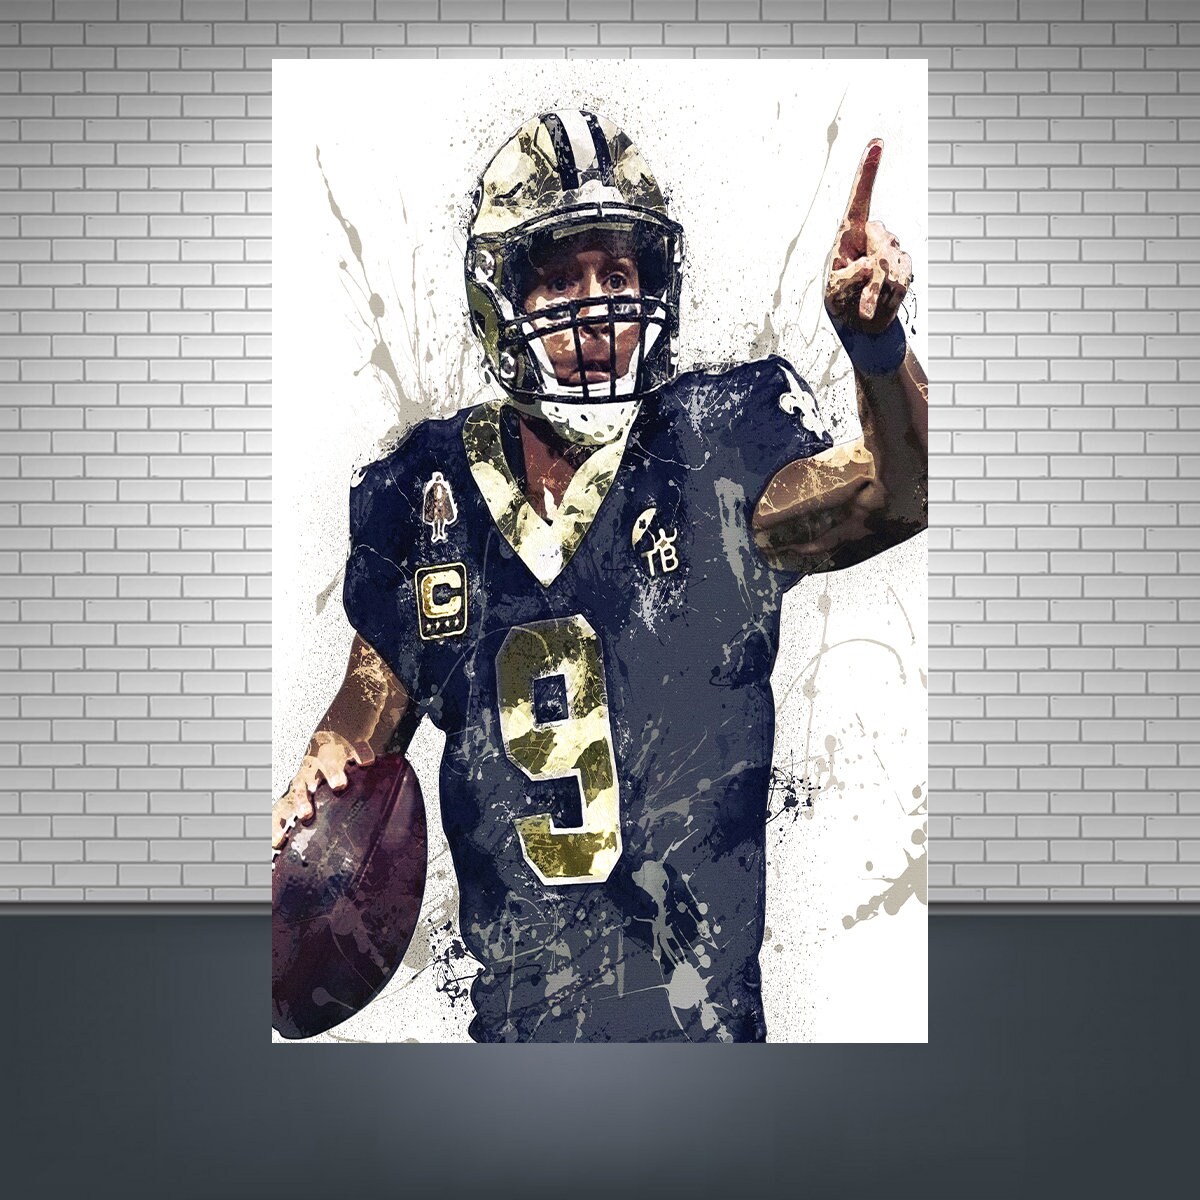 Drew Brees New Orleans Saints -Poster, Canvas Wrap, Man Cave, Bar, Game Room